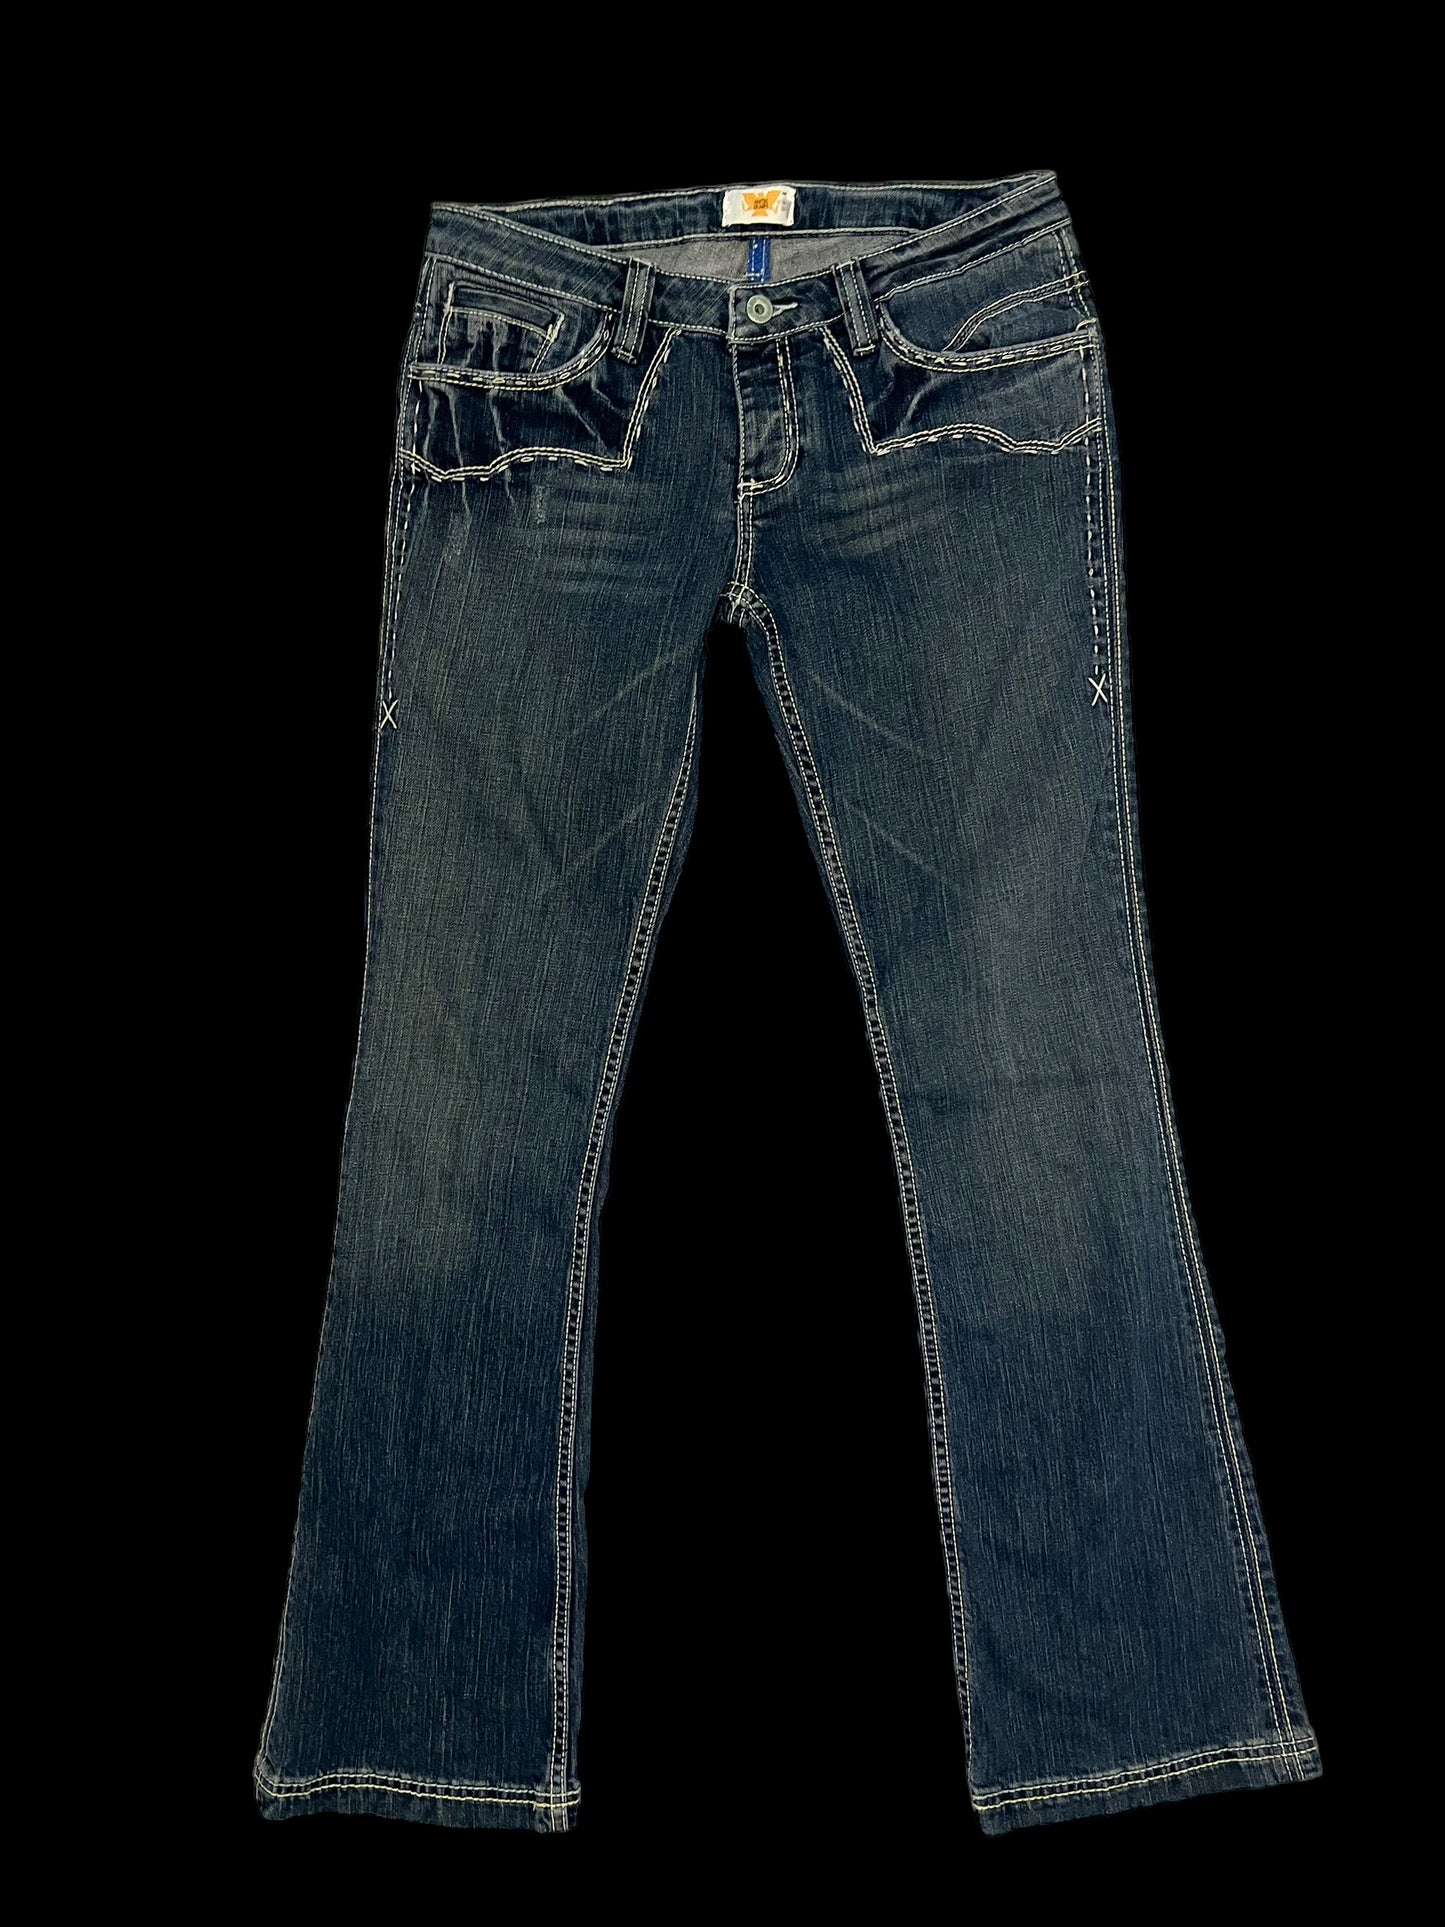 Vintage embroidered jeans